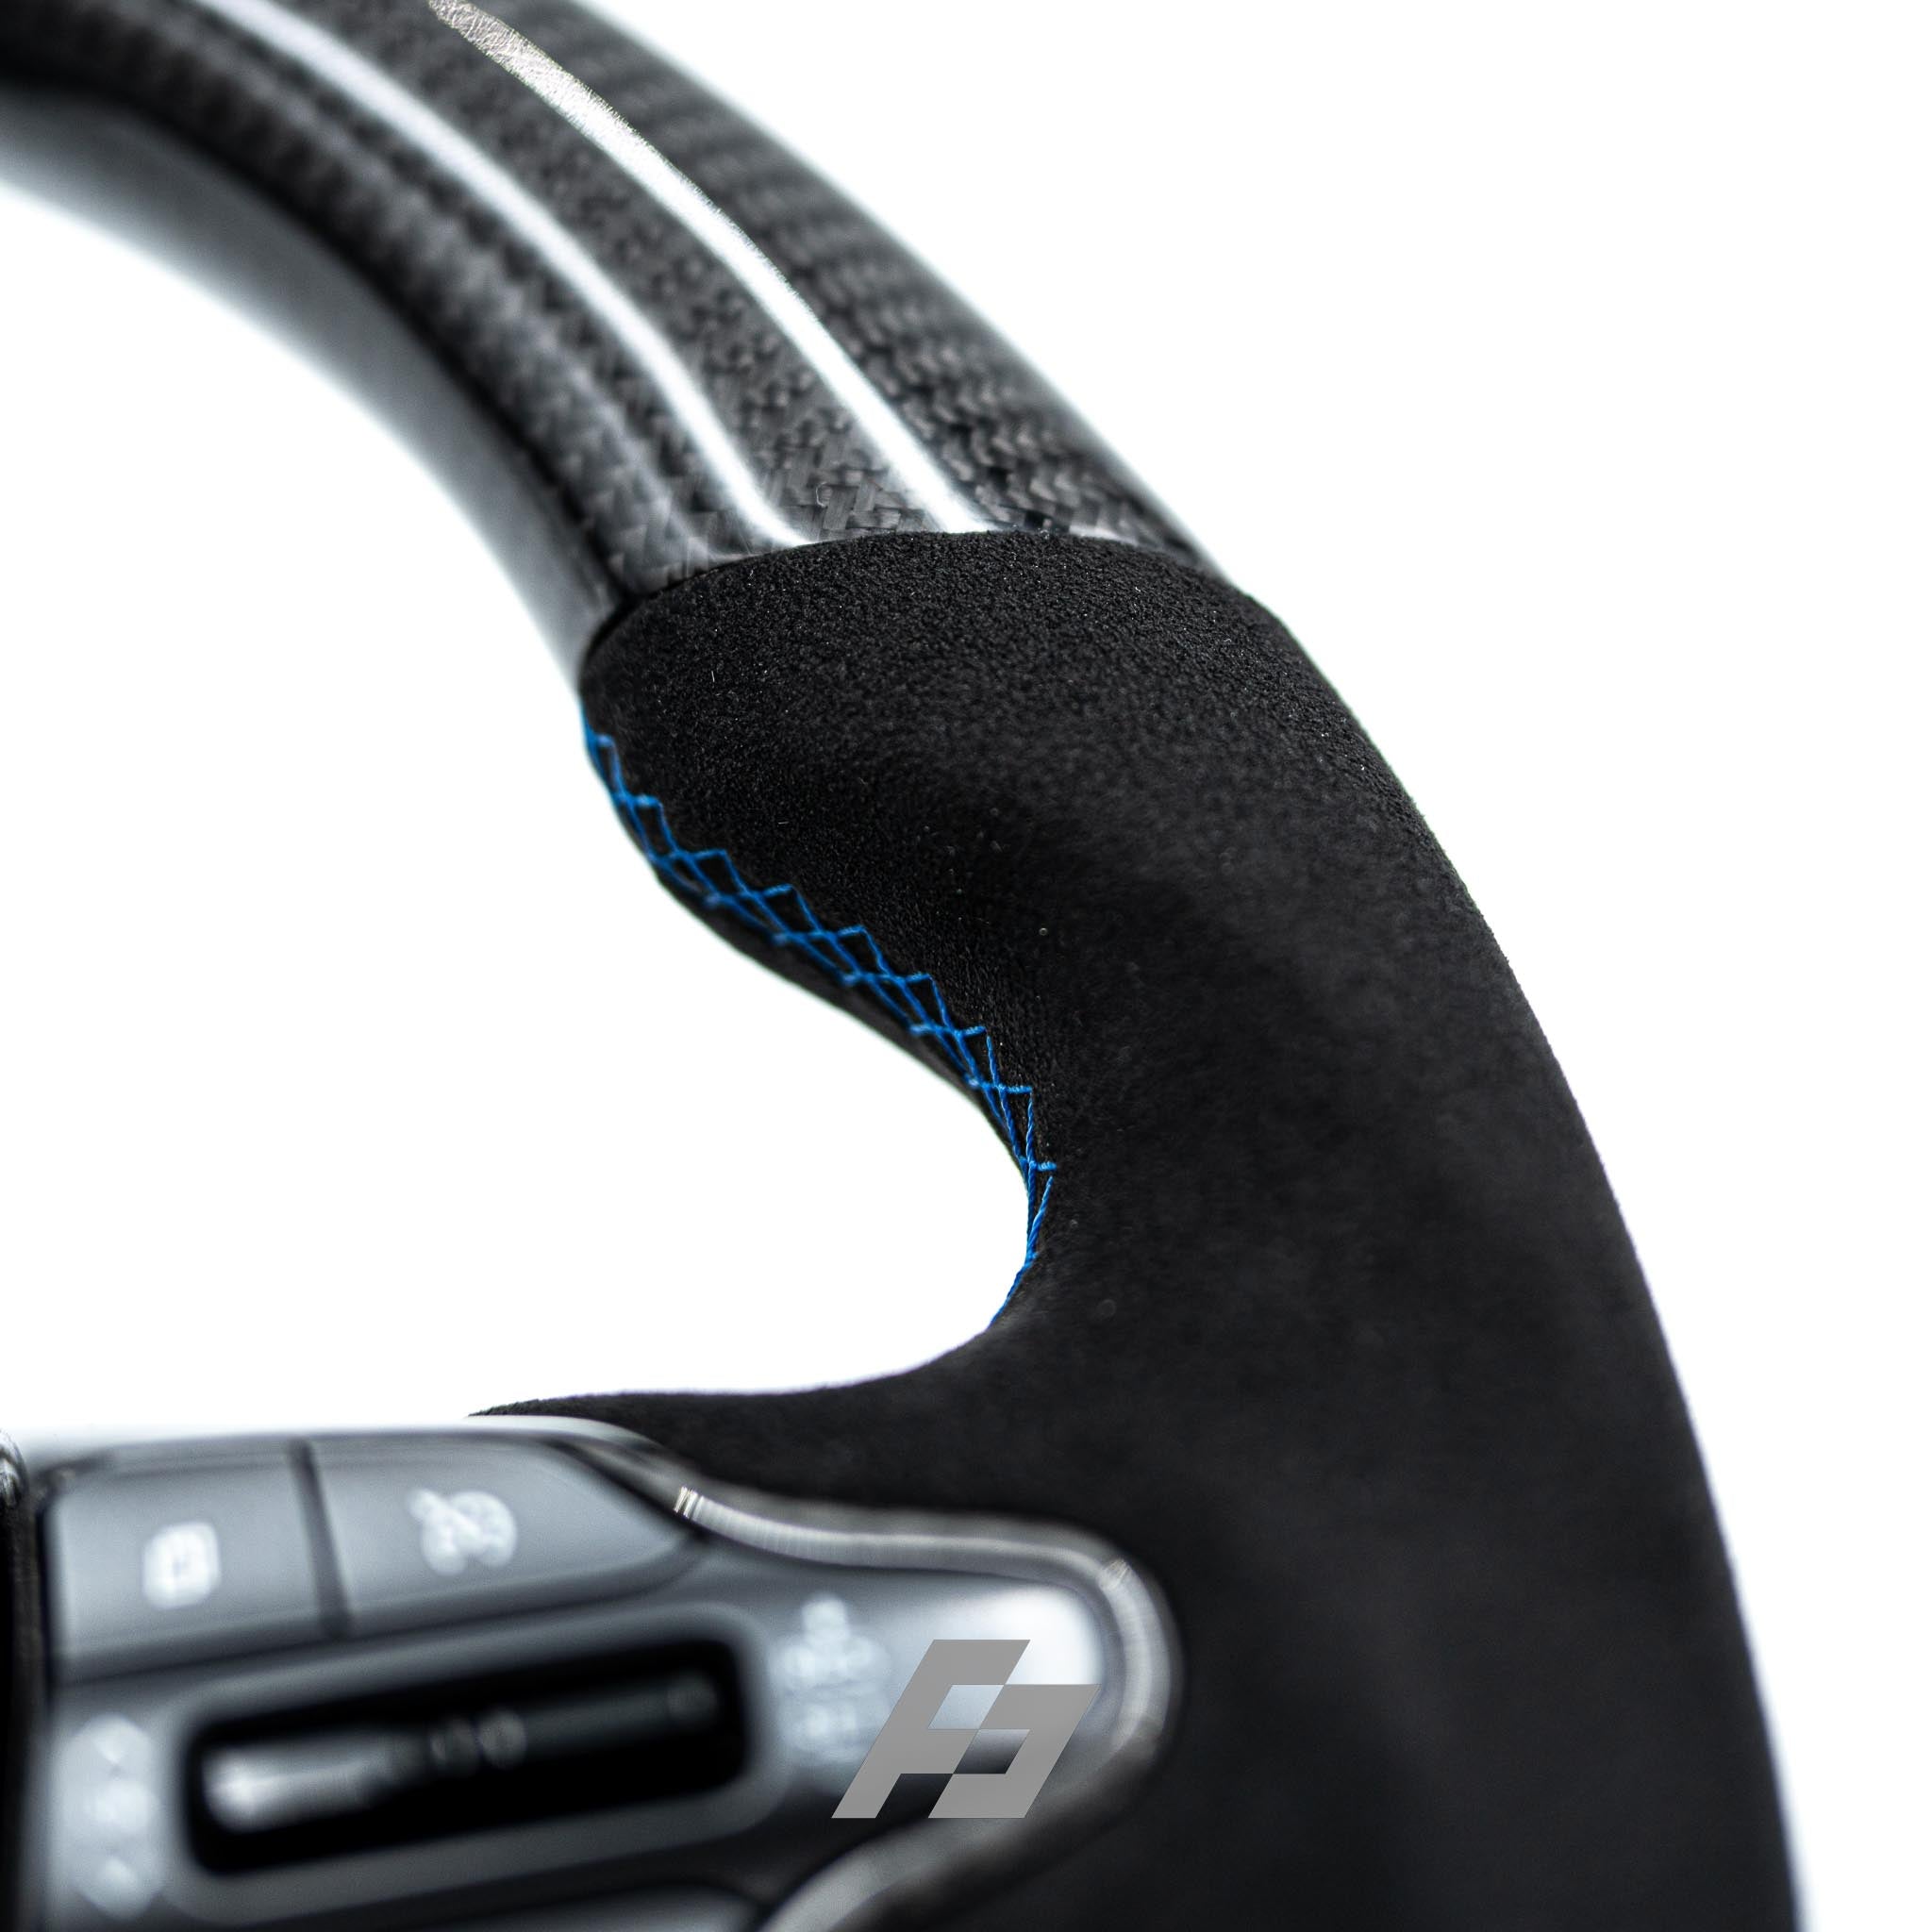 Carbon steering wheel for Hyundai I30N